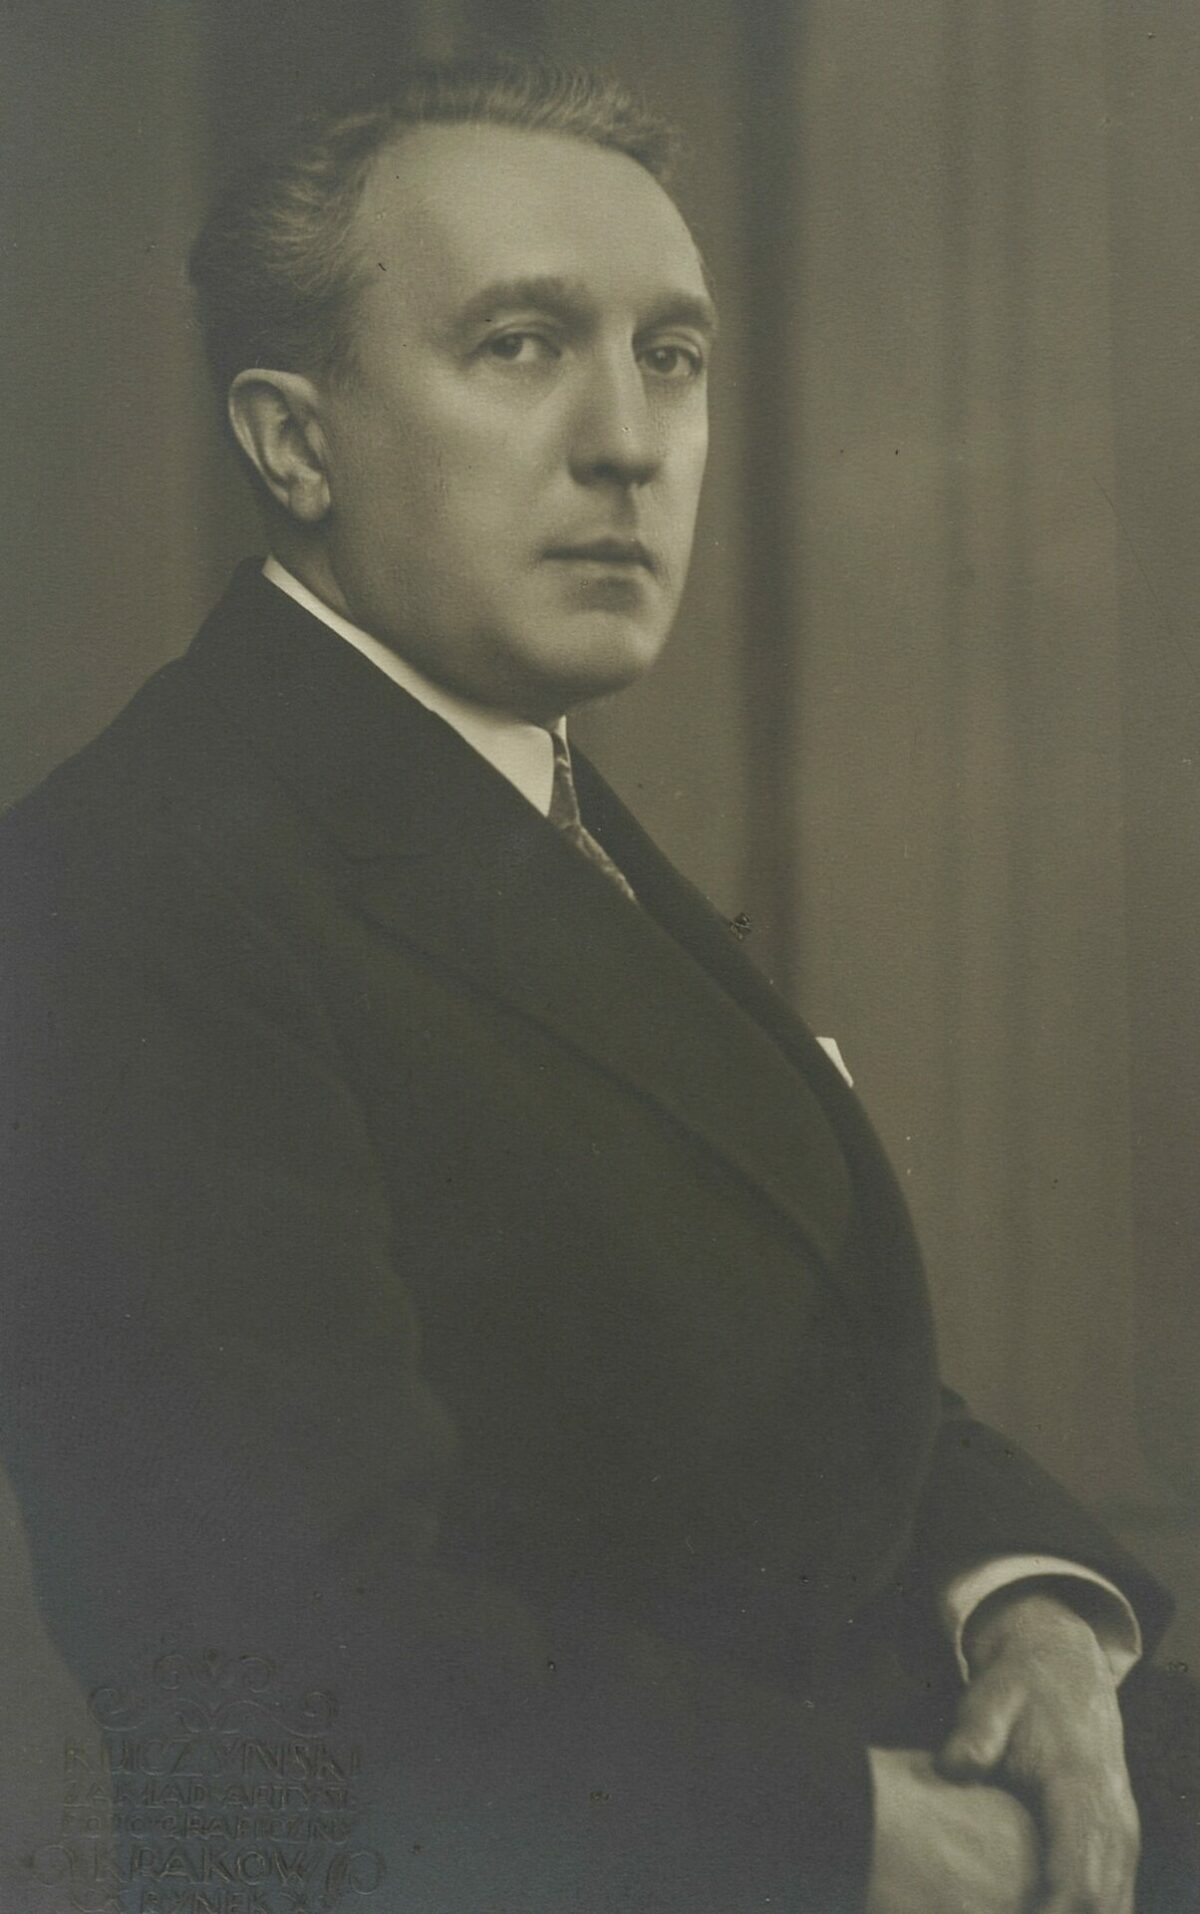 Ladas Klassikwelt 101: Zdzisław Jachimecki (1882-1953)  klassik-begeistert.de, 18. Januar 2023